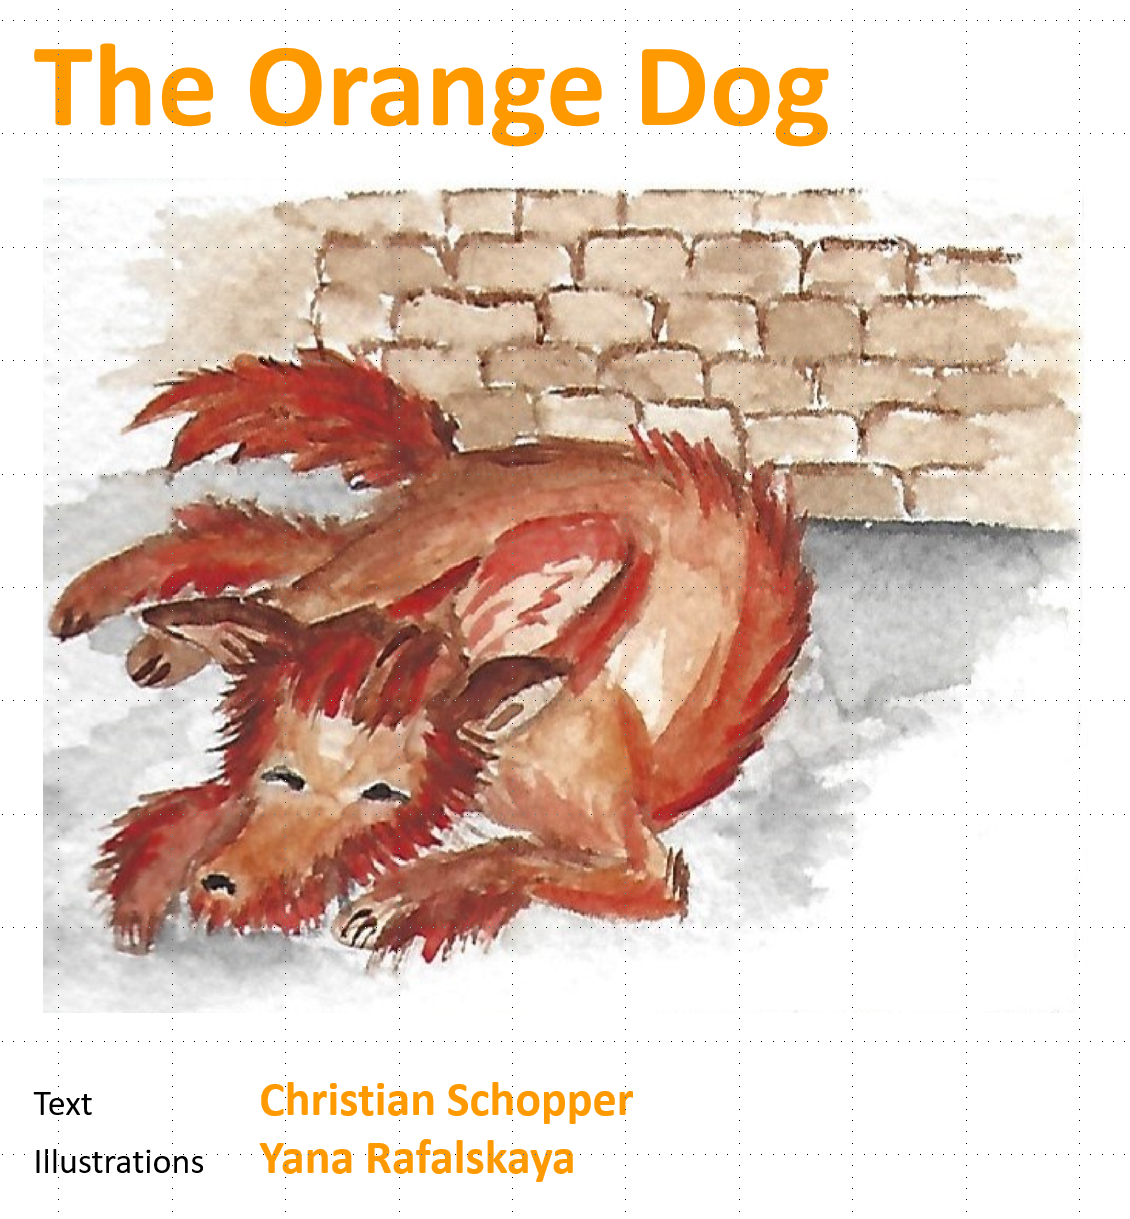 the orange dog, kindle, amazon, yana rafalskaya, christian schopper, book, story, children, pets, dog, good night